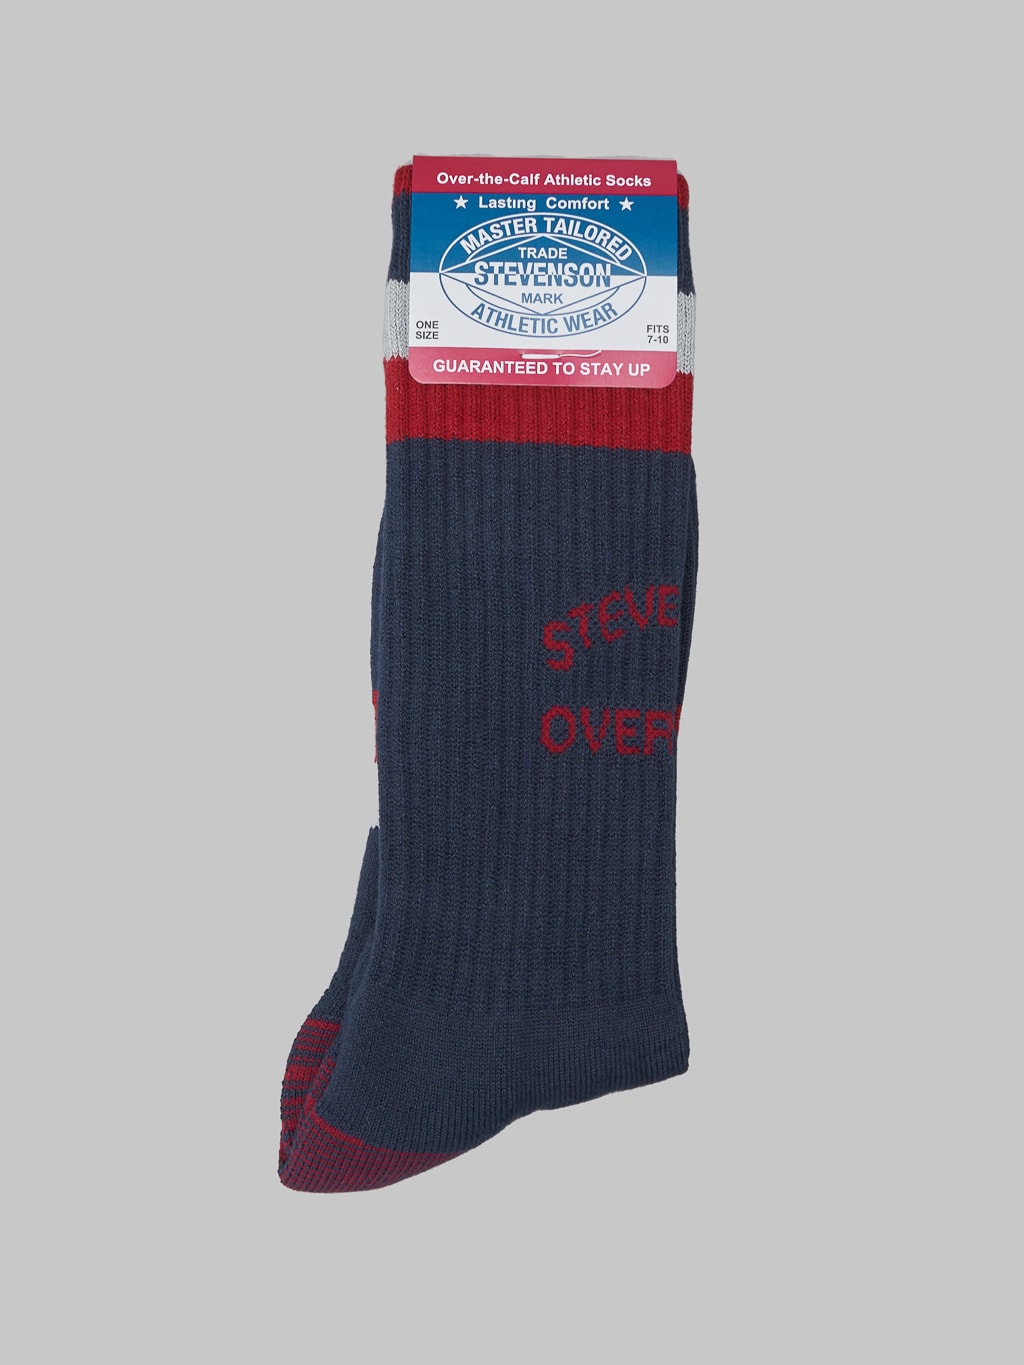 Stevenson Overall Athletic Socks navy comfortable cotton